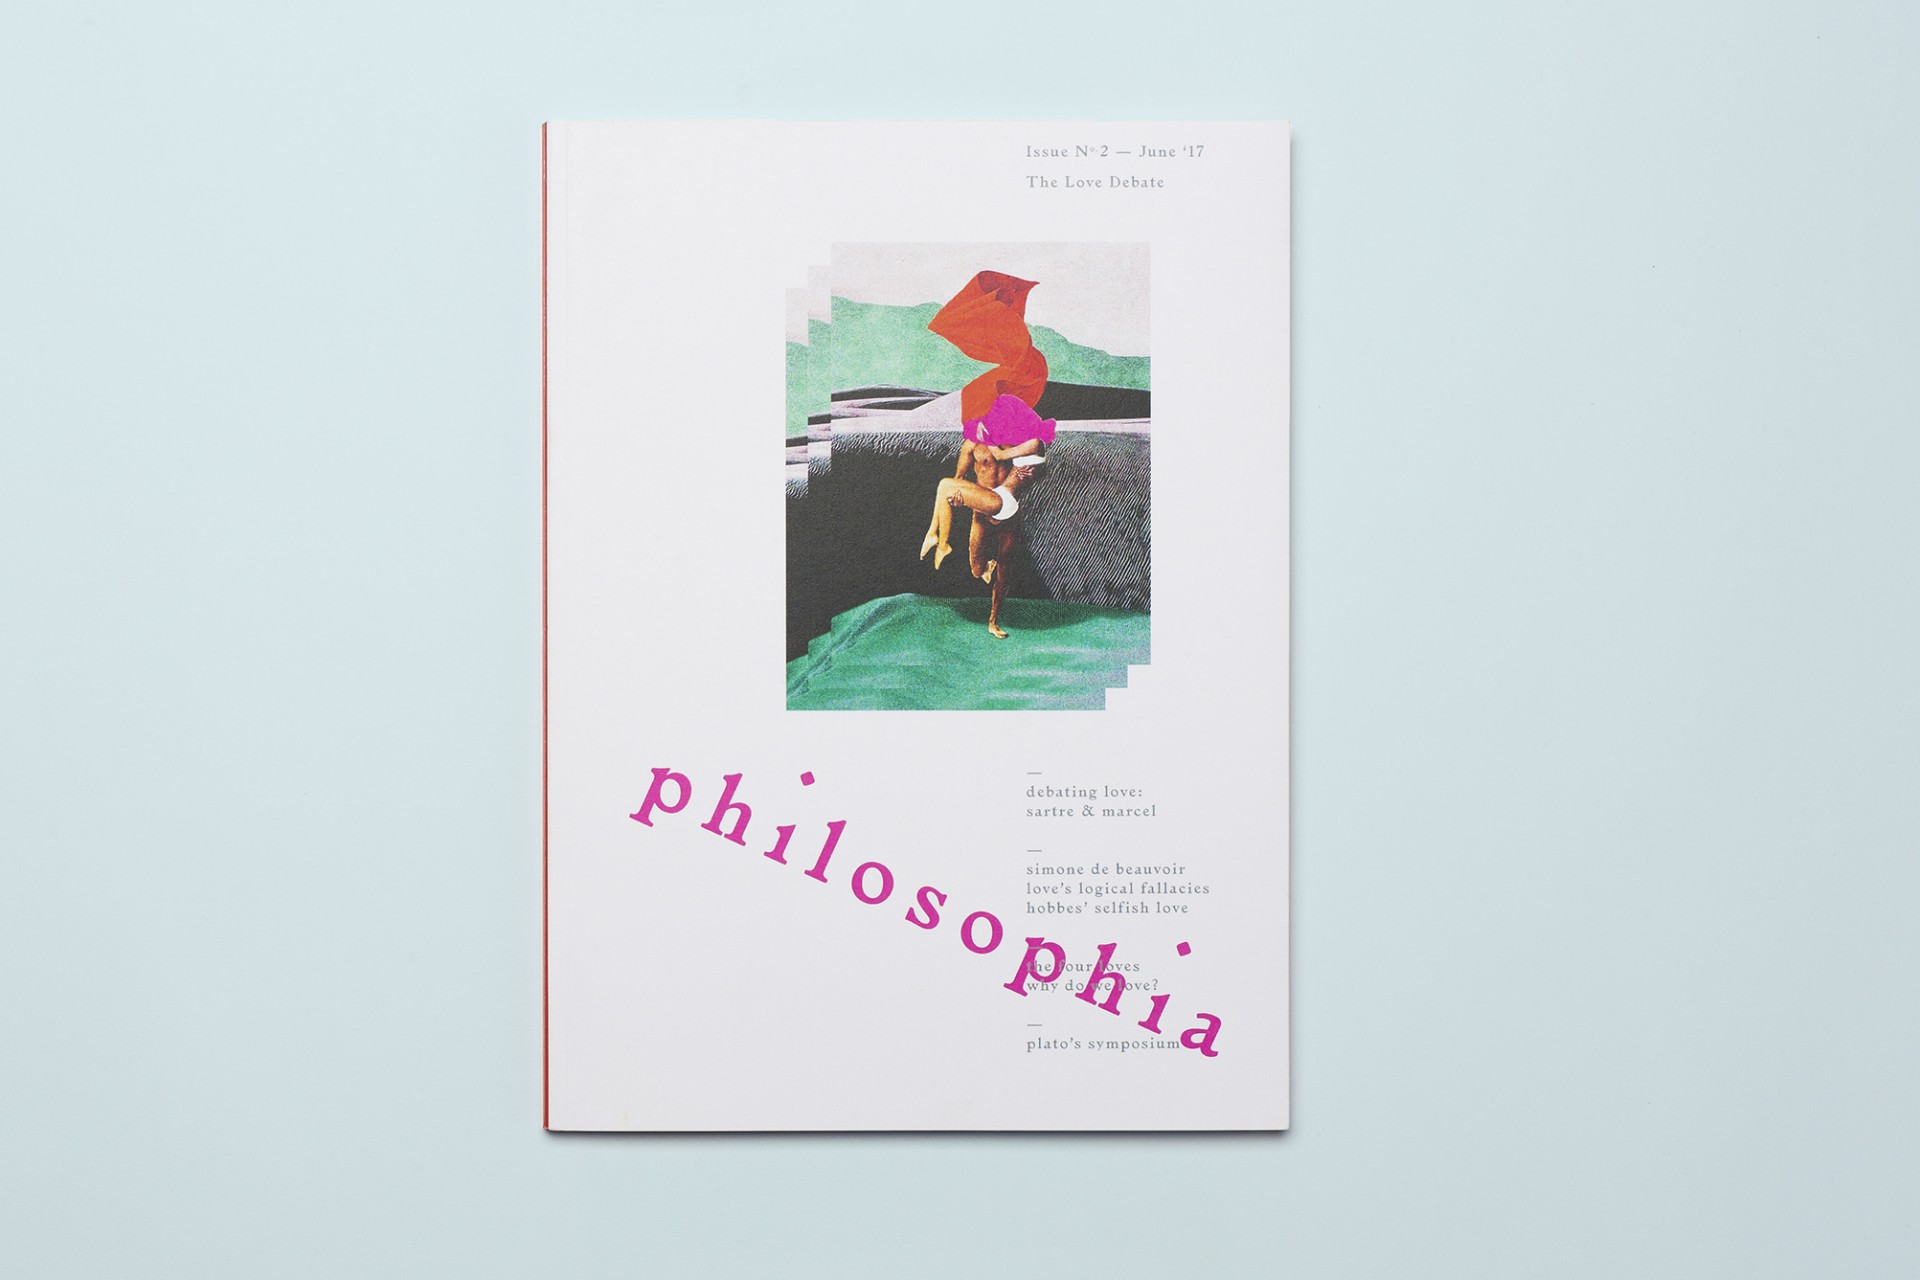 Marylouise McGraw philosophia magazine